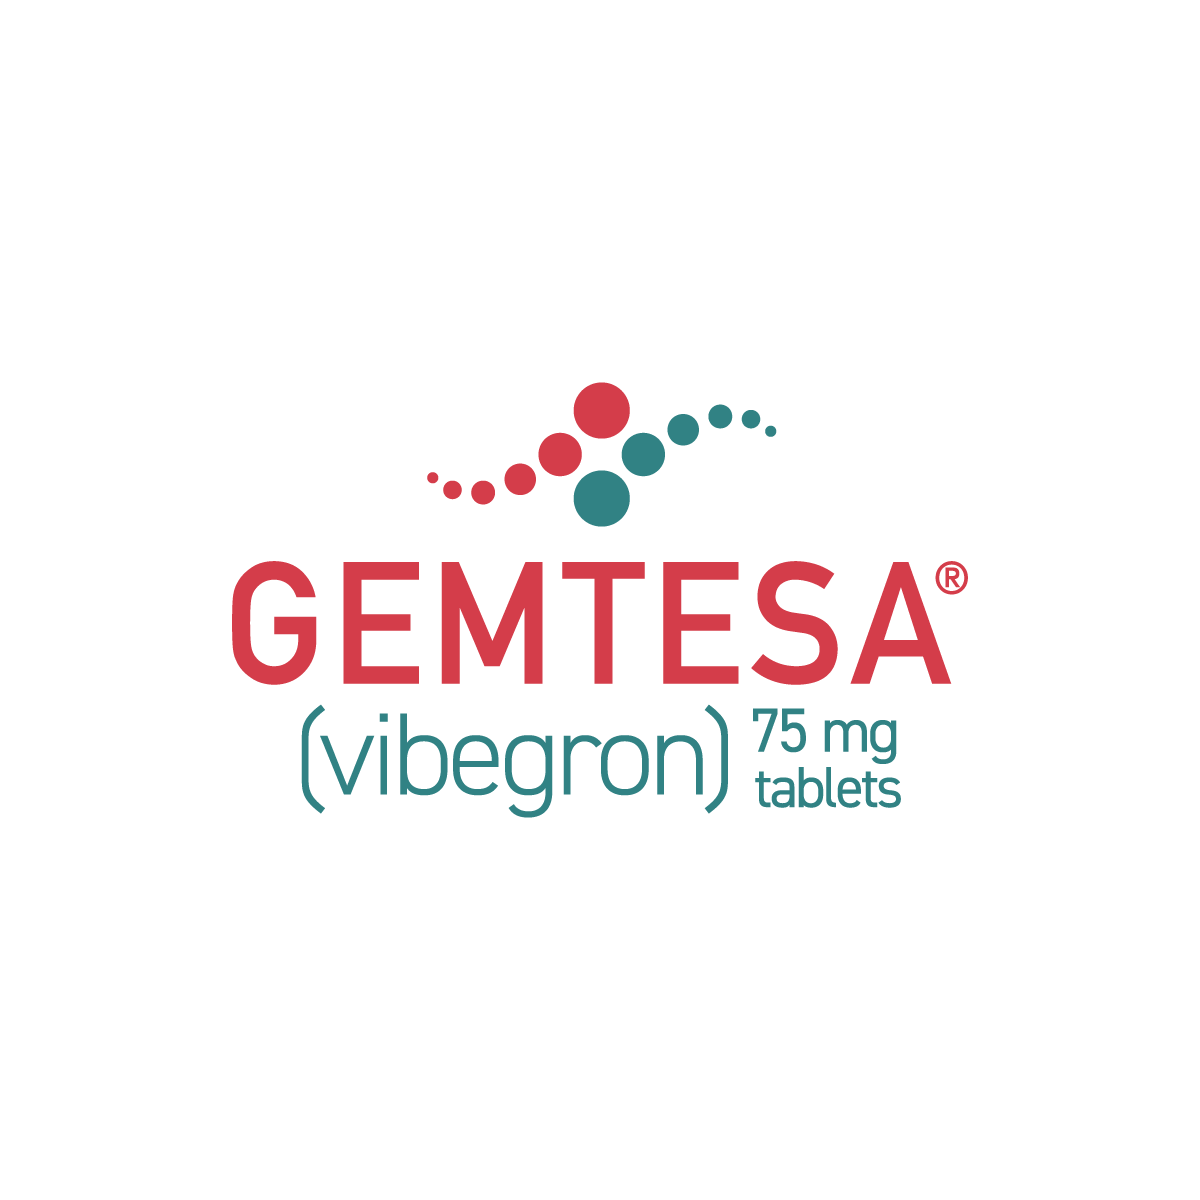 GEMTESA® (vibegron) 75 mg tablets for Treatment of Overactive Bladder